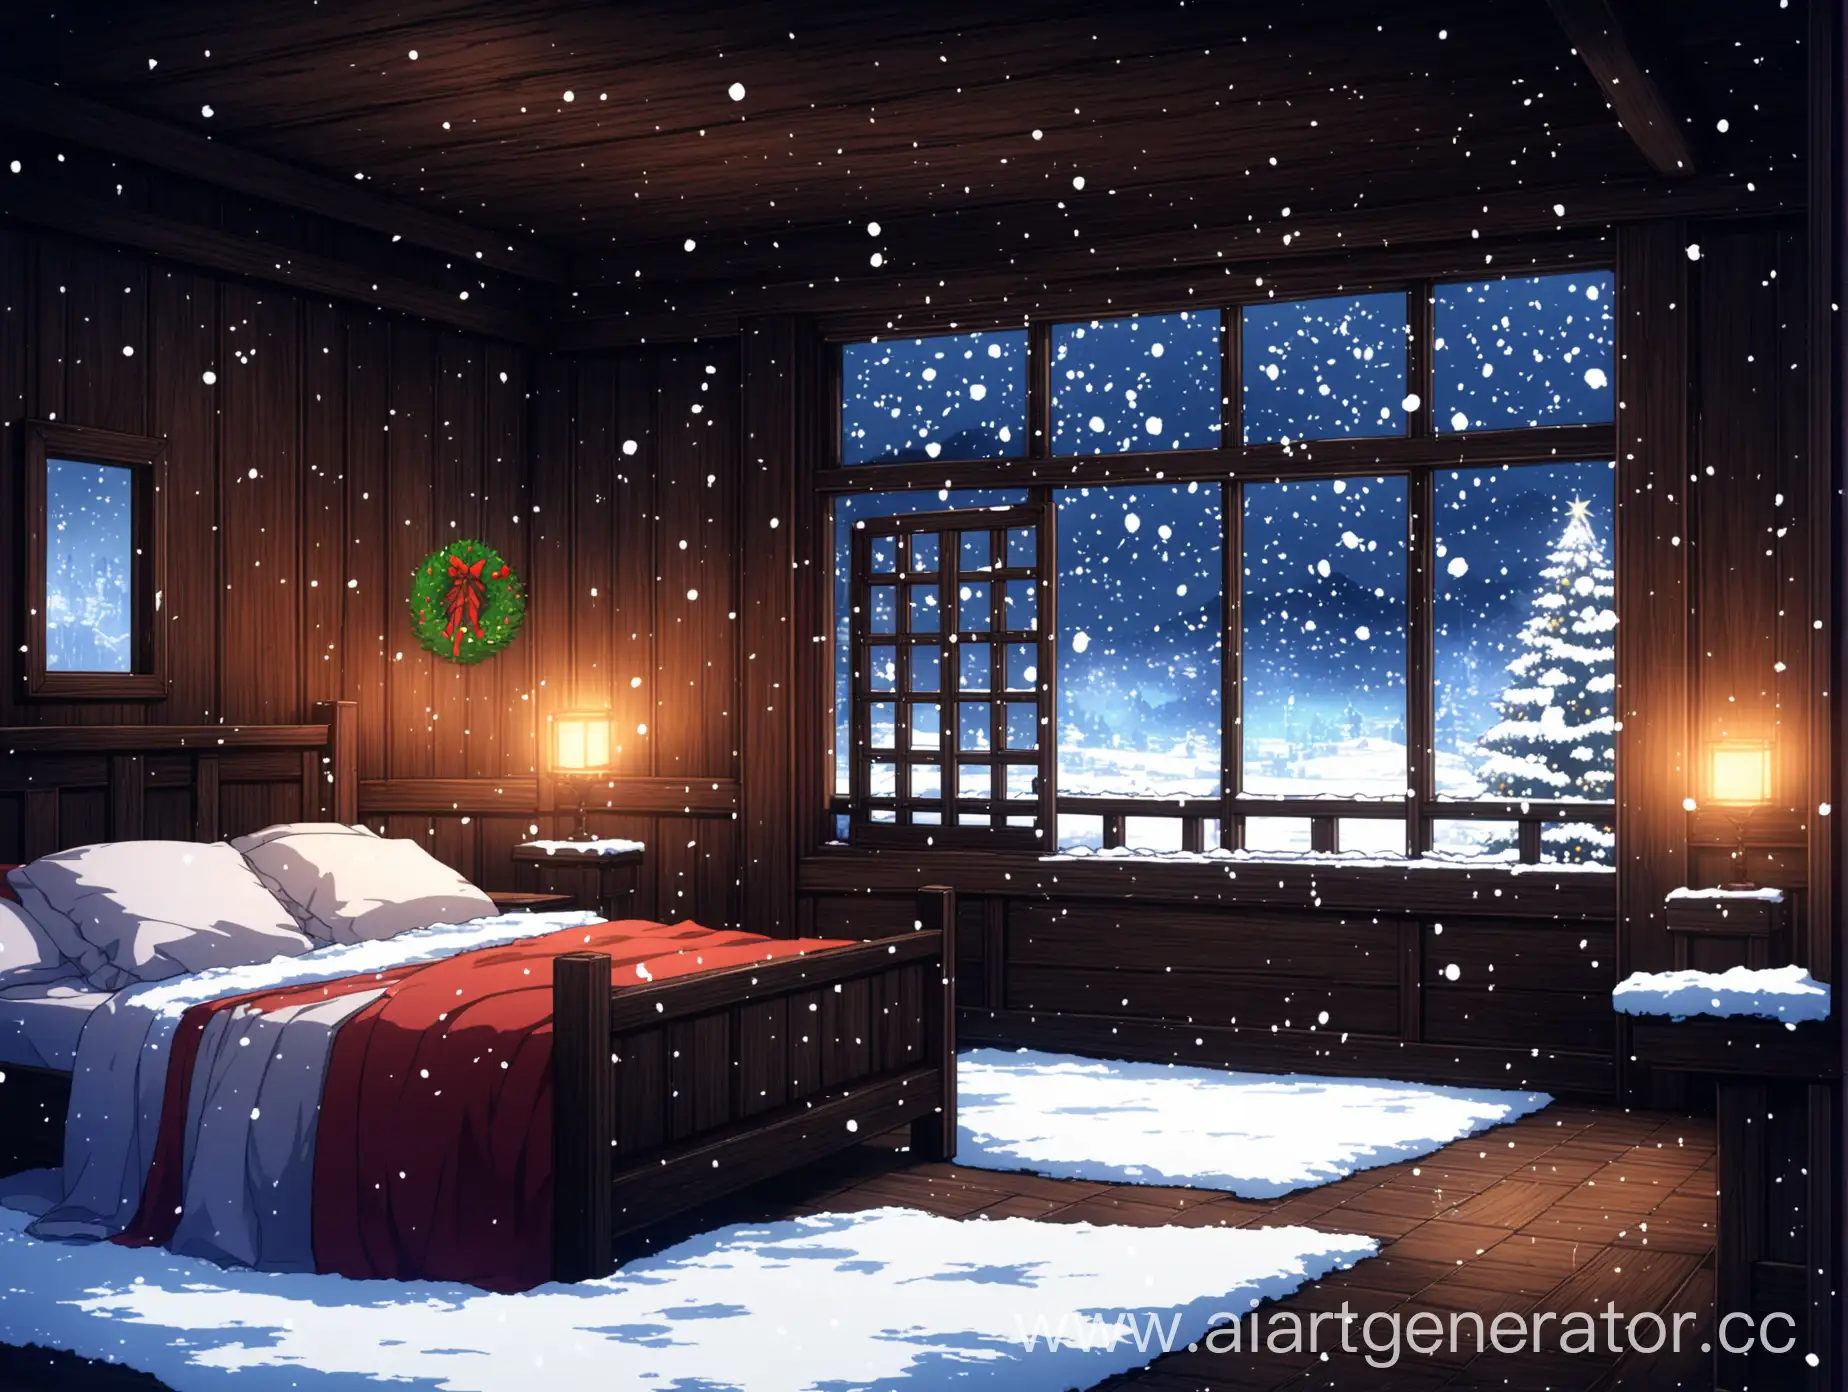 Cozy-Anime-Bedroom-Scene-with-Festive-Snowy-Window-View